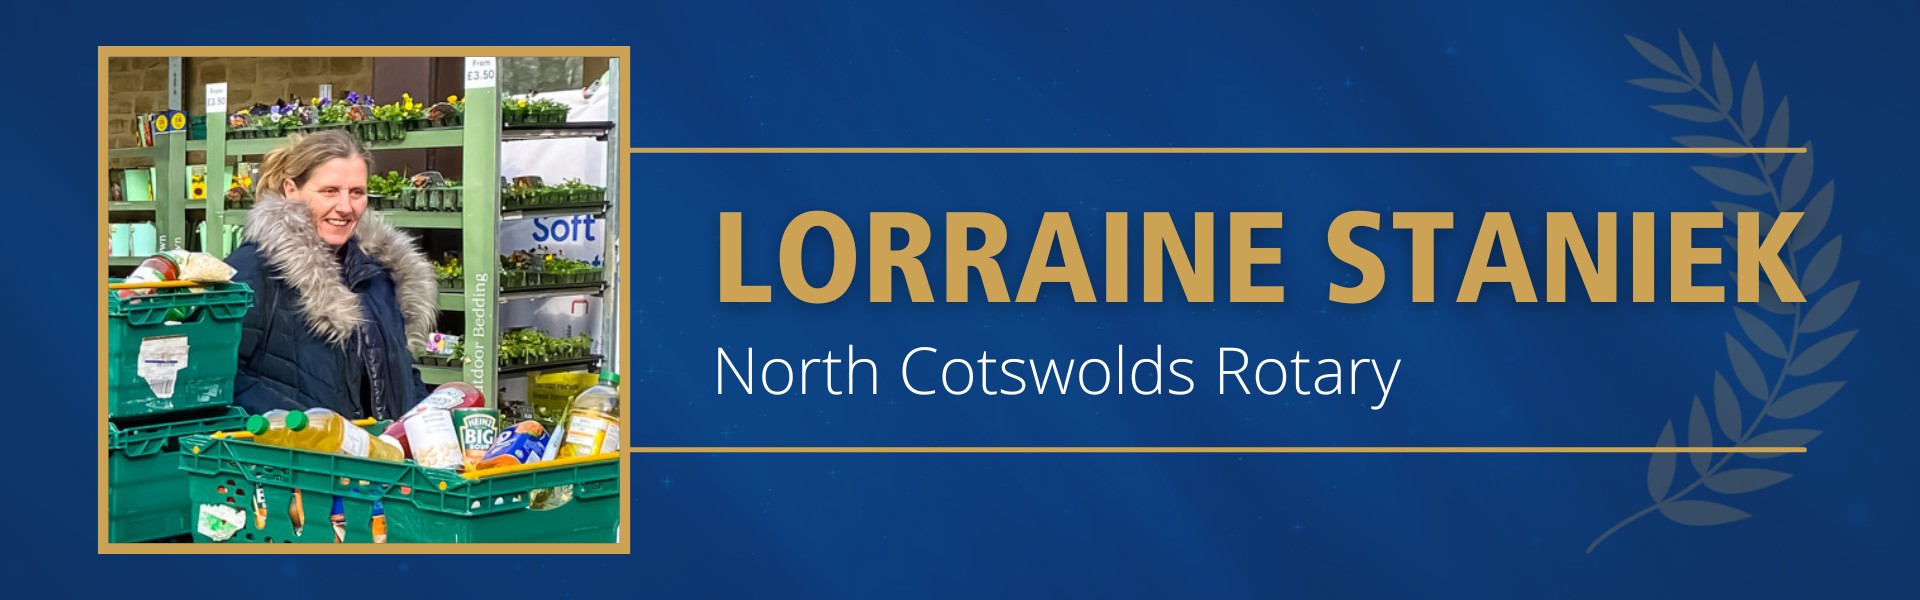 Lorraine Staniek North Cotswolds Rotary